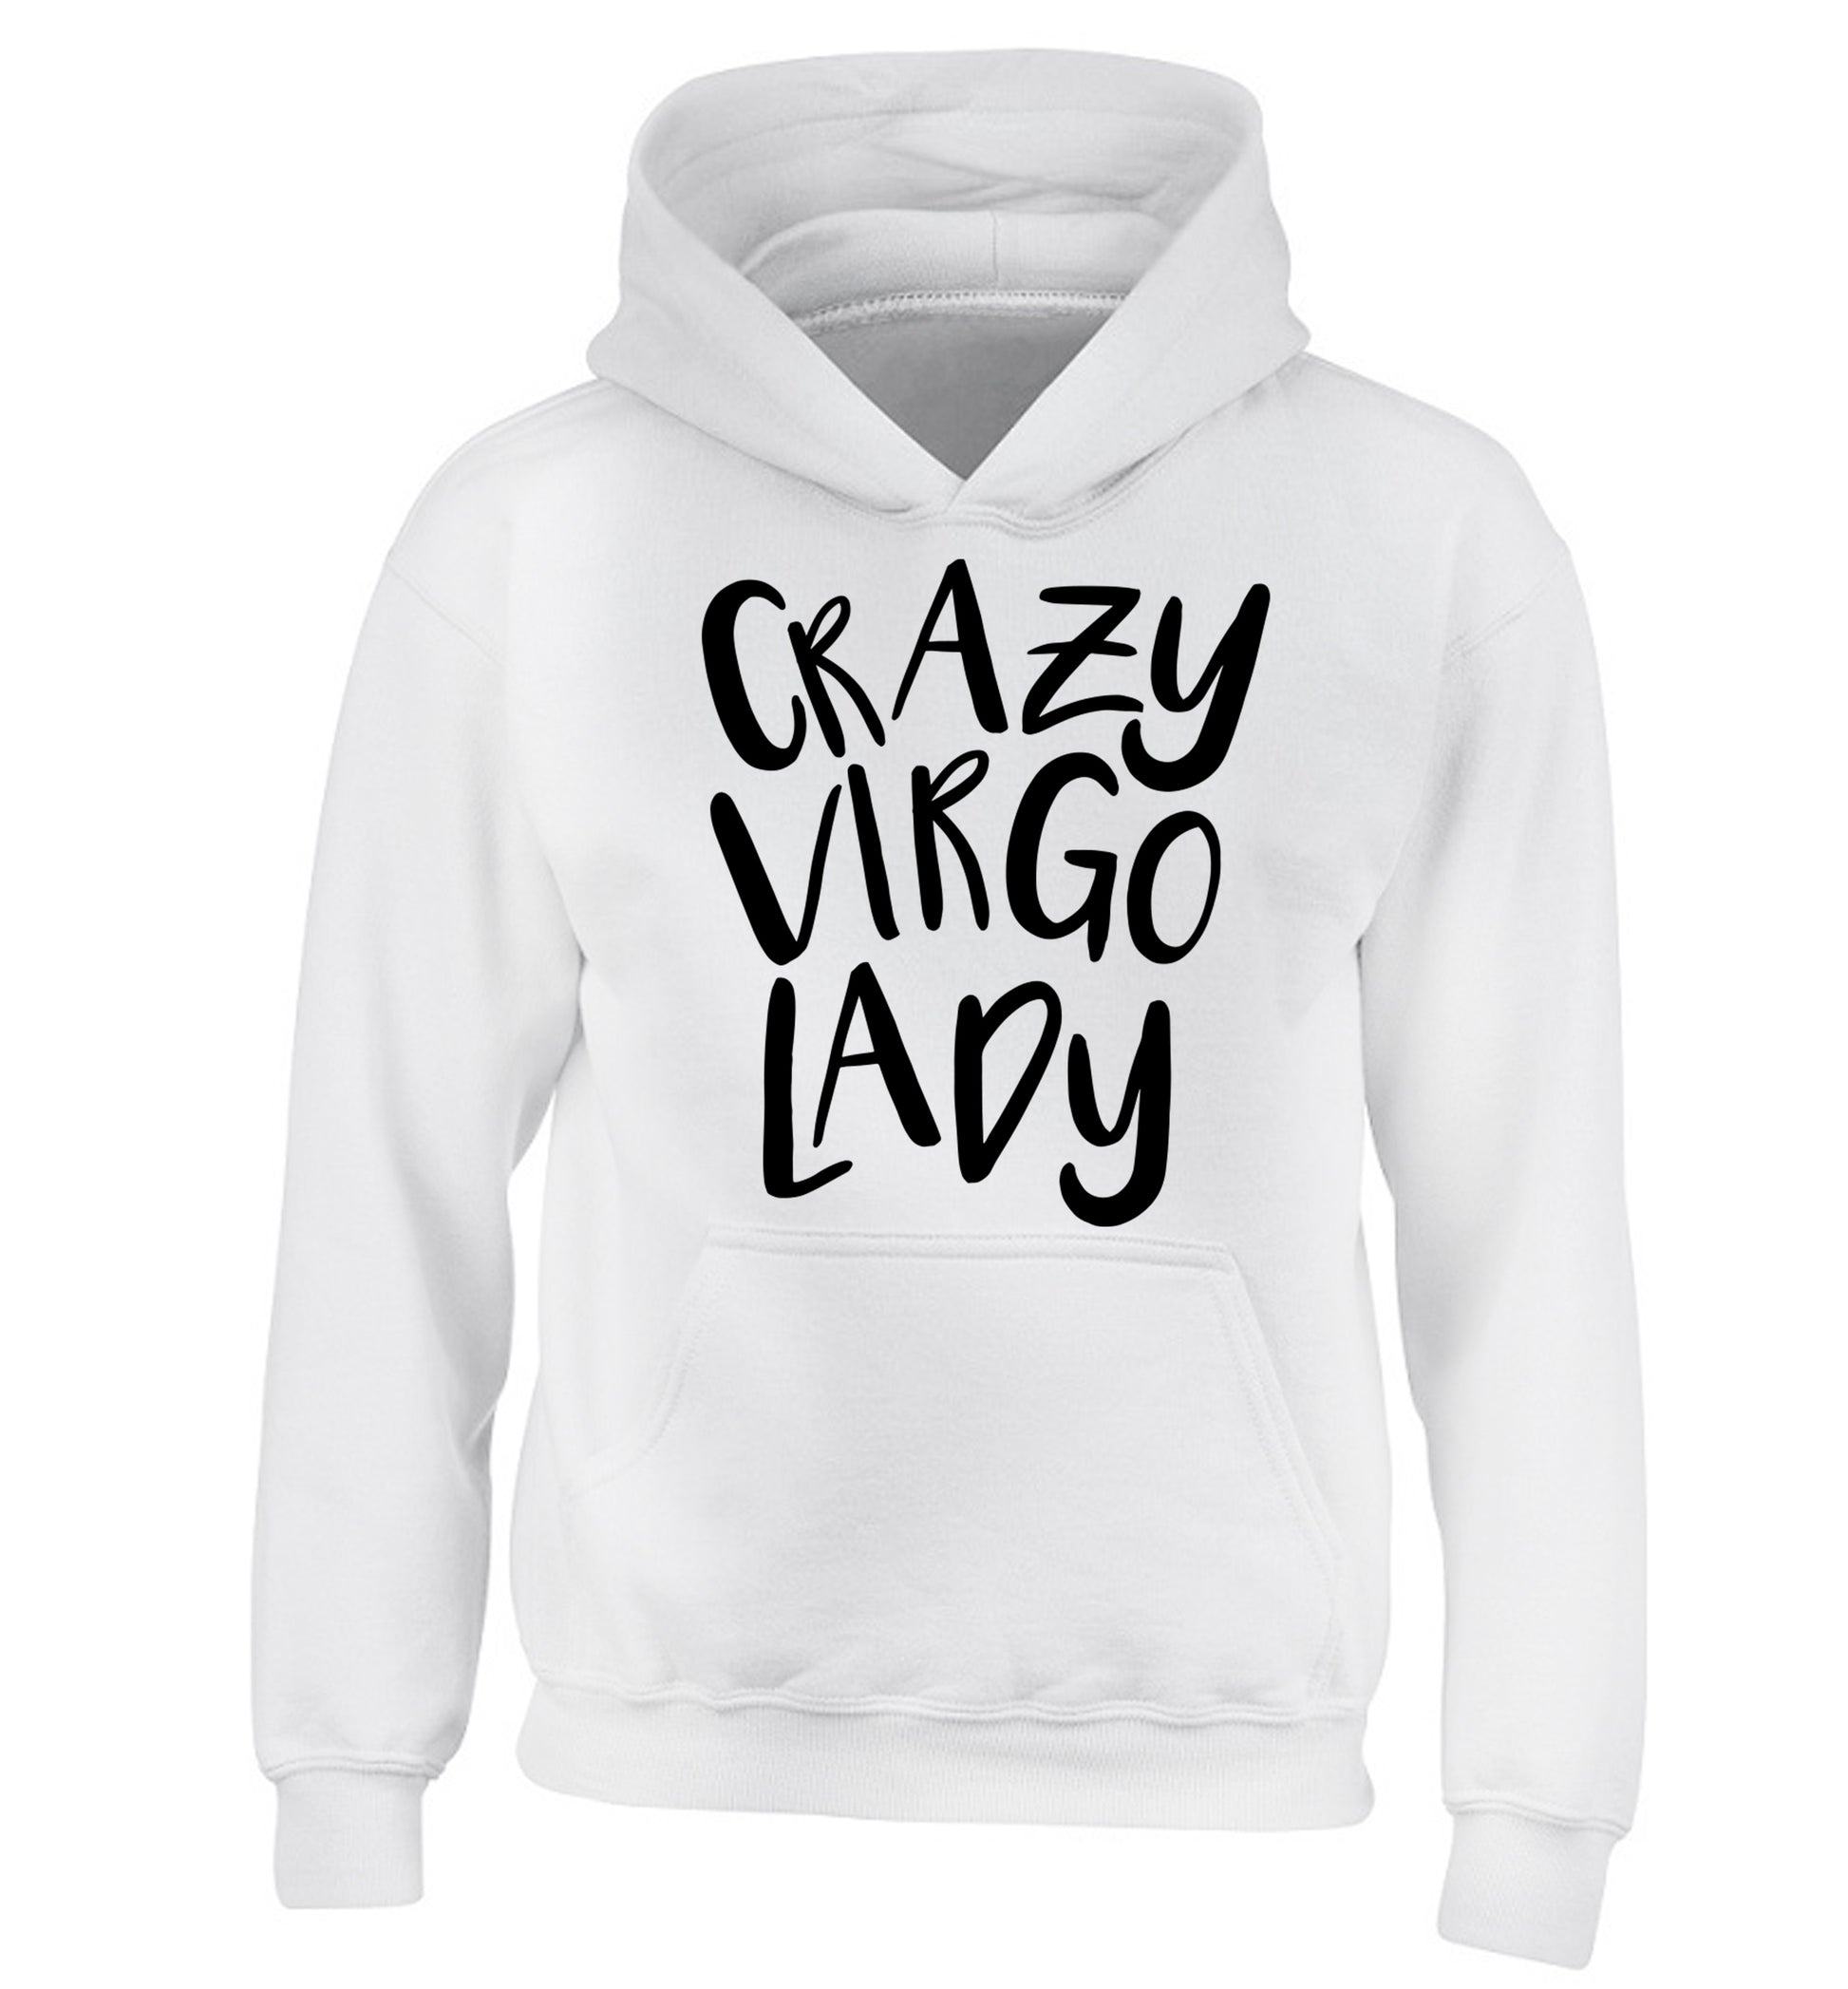 Crazy virgo lady children's white hoodie 12-13 Years